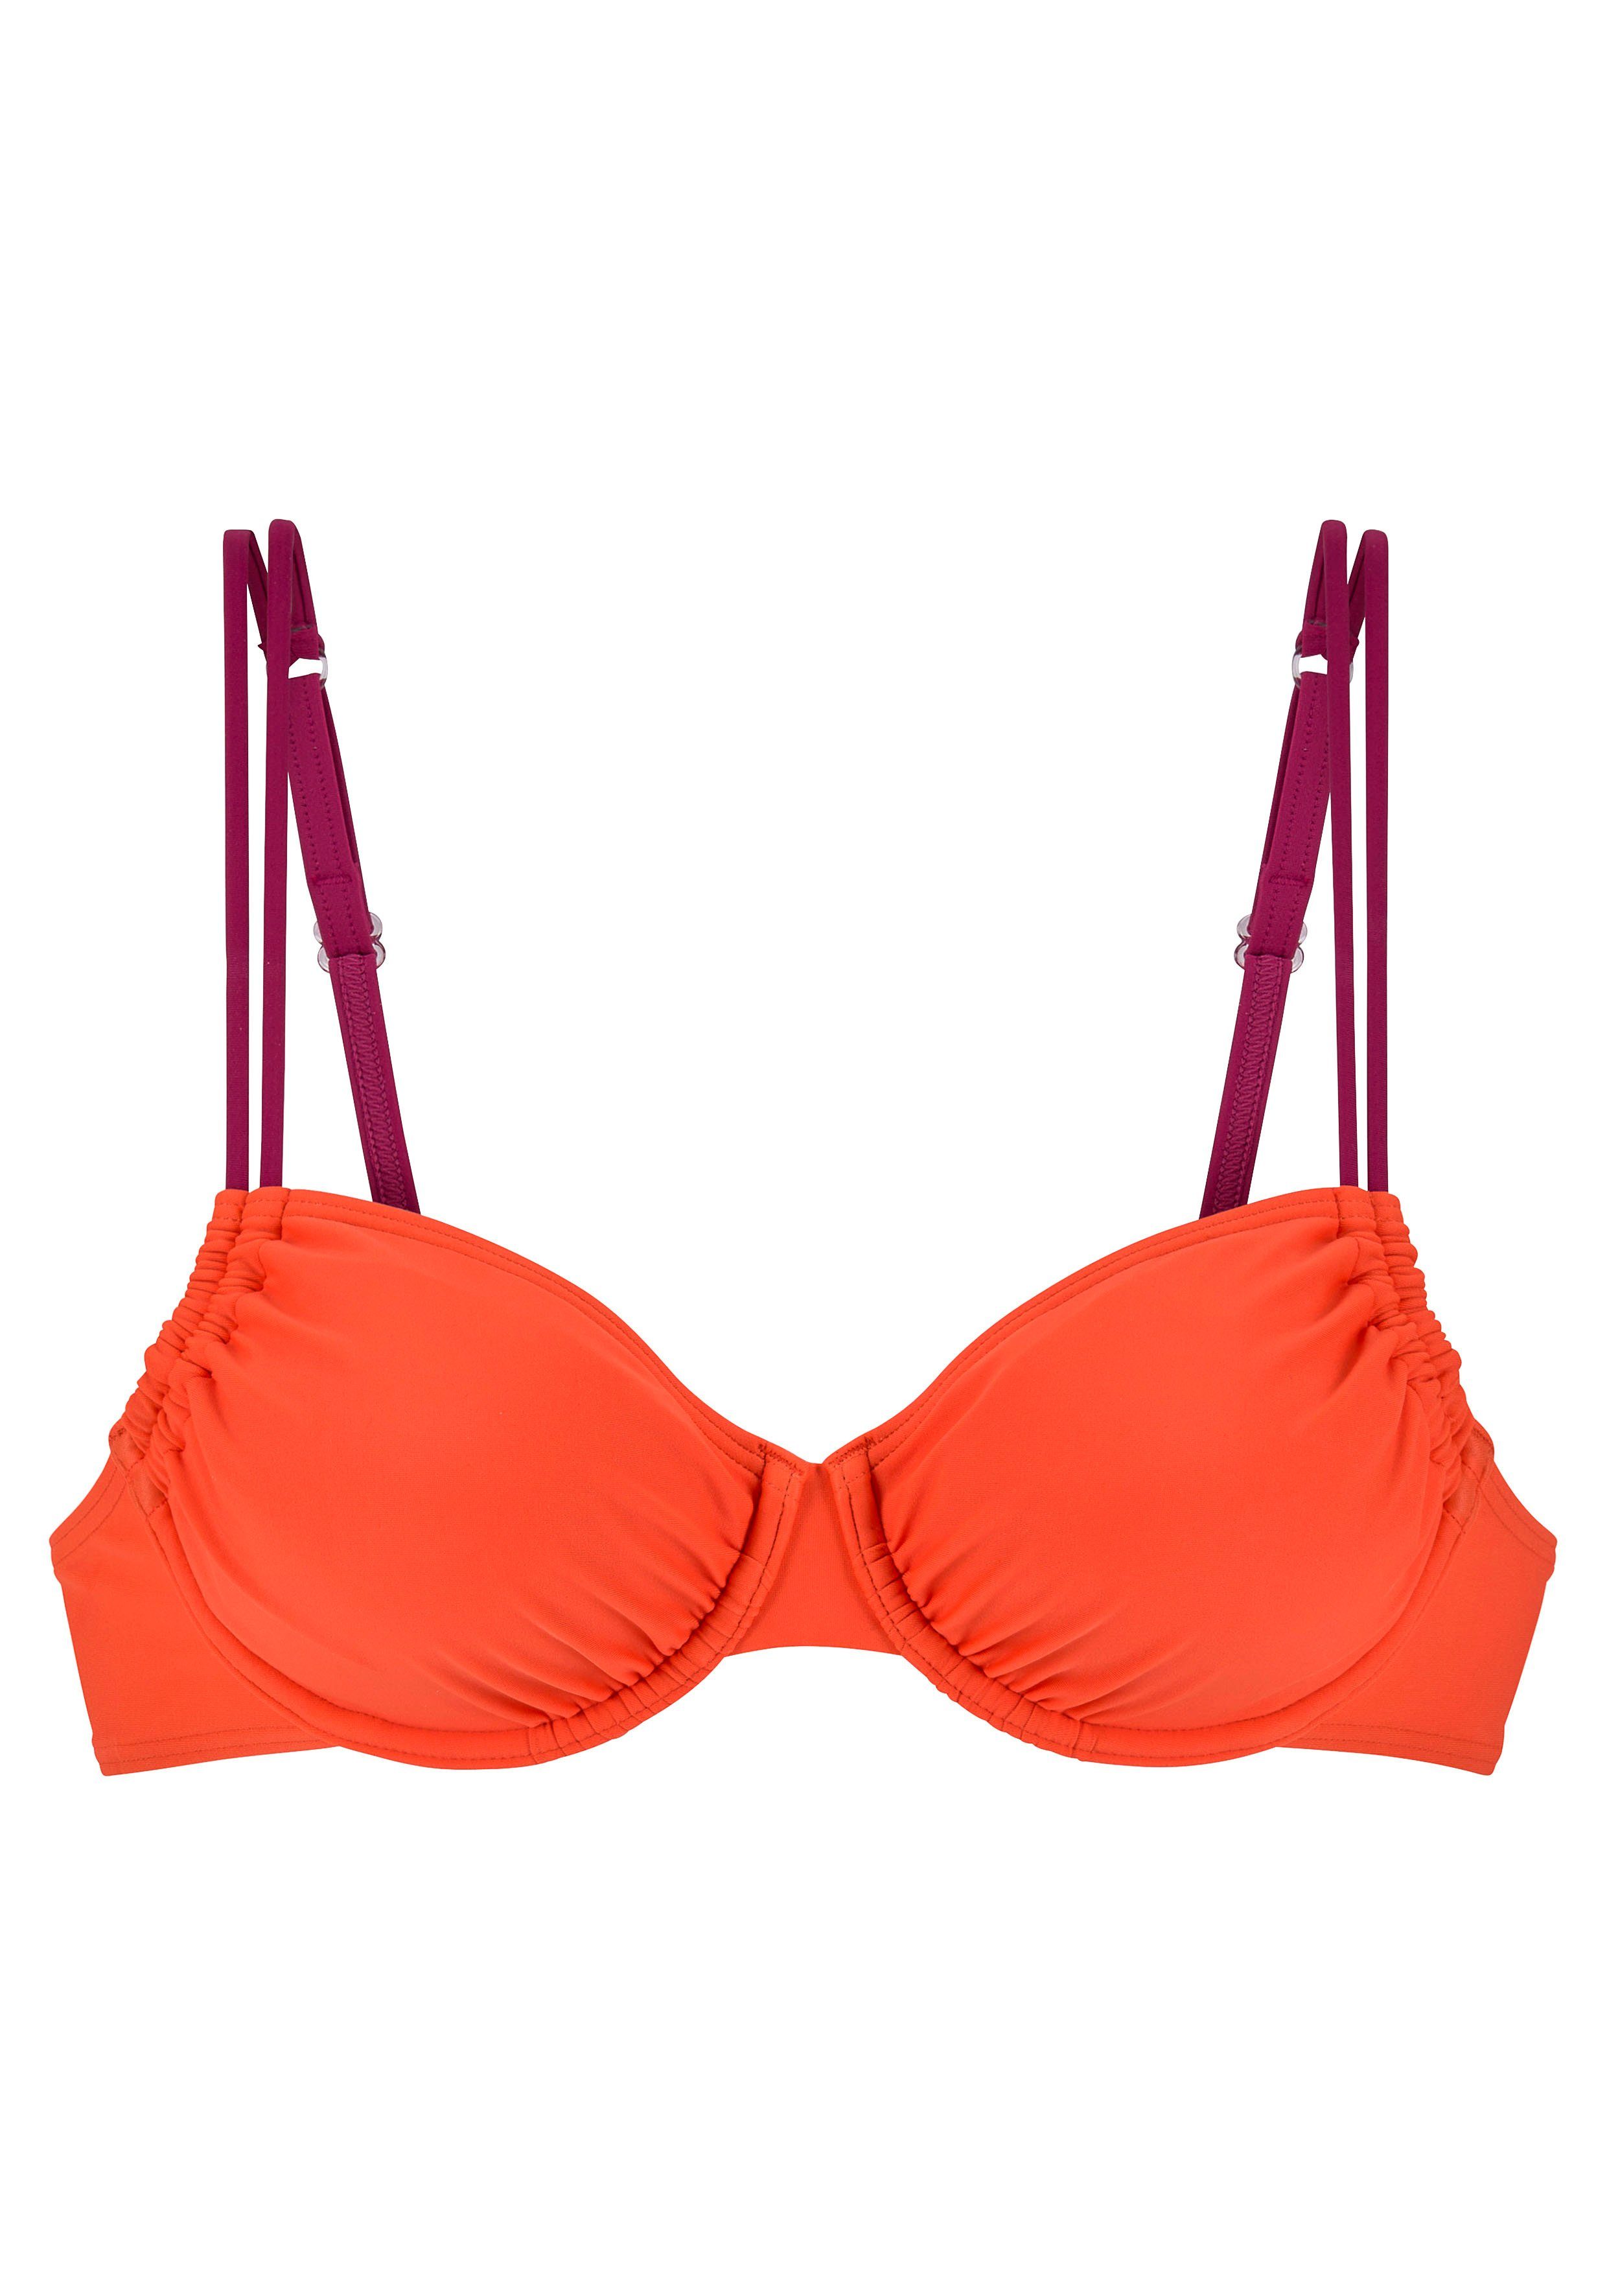 s.Oliver Bügel-Bikini-Top Yella, mit kontrastfarbenen Details